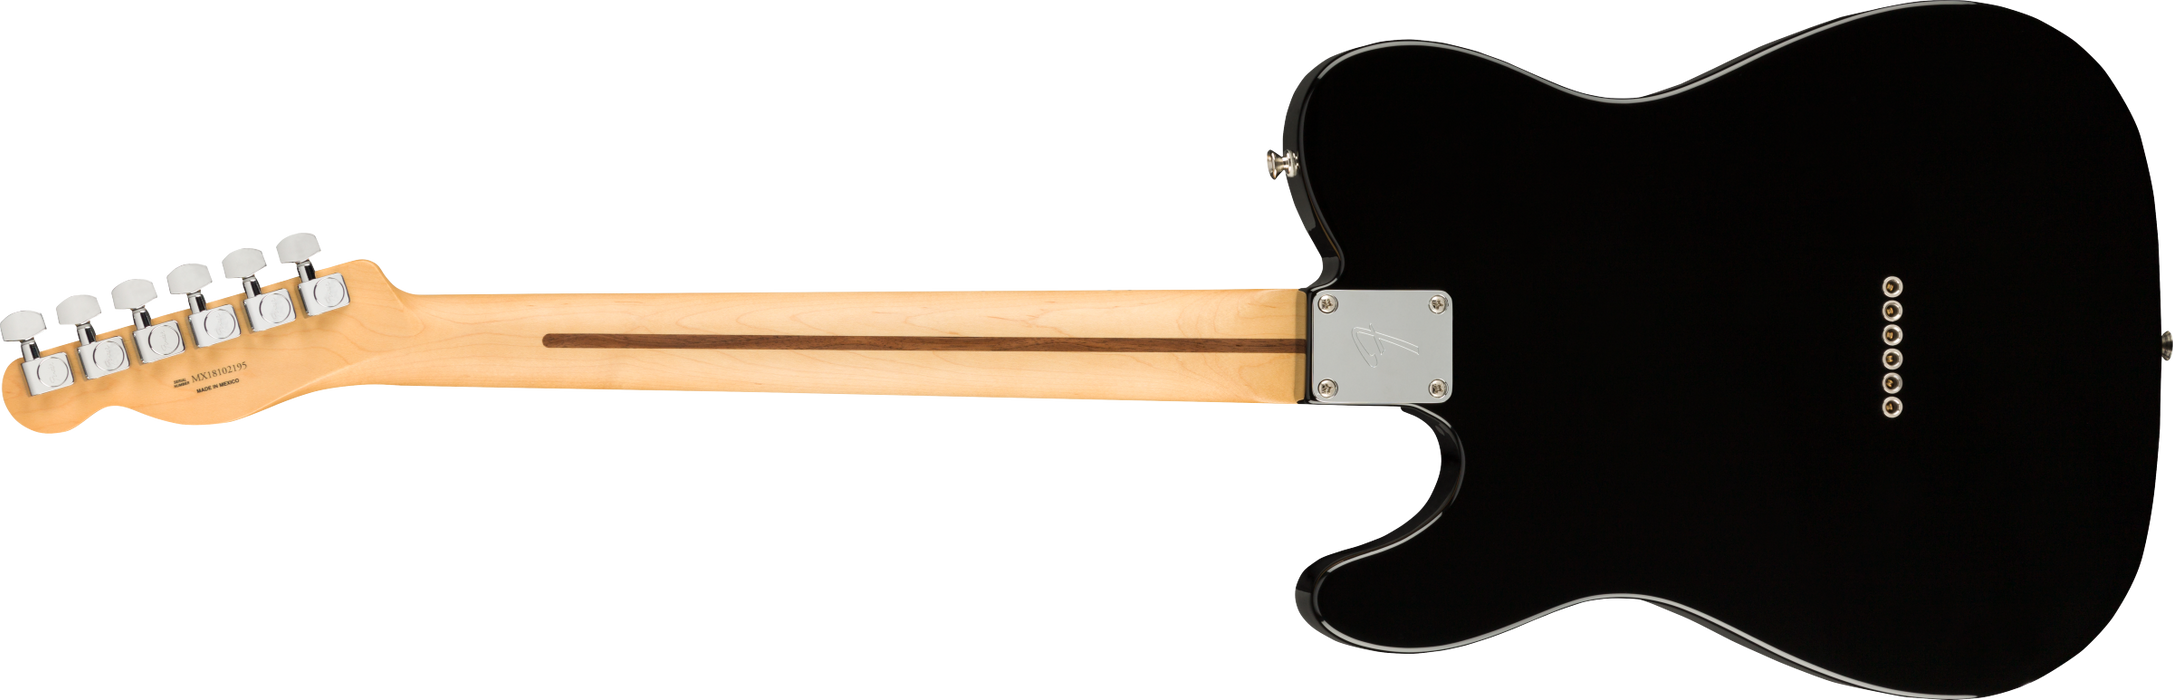 Fender Player Telecaster Maple Fingerboard Black Electric Guitar